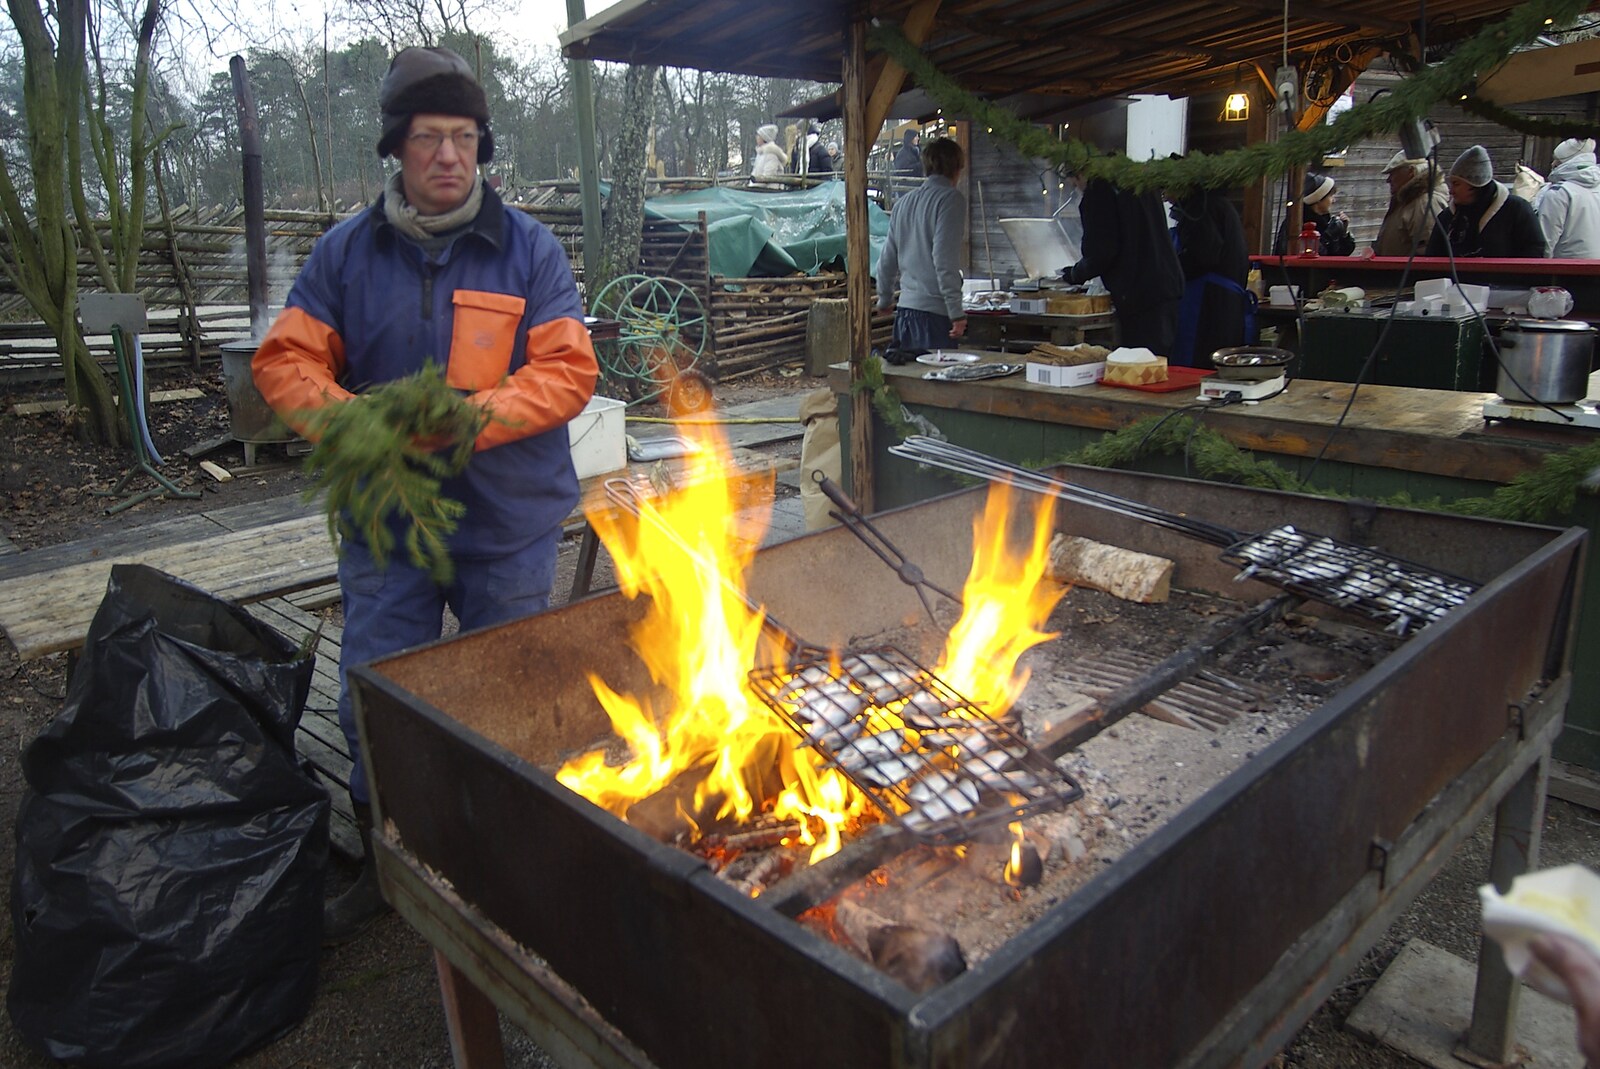 Flamed herrings from A Few Hours in Skansen, Stockholm, Sweden - 17th December 2007